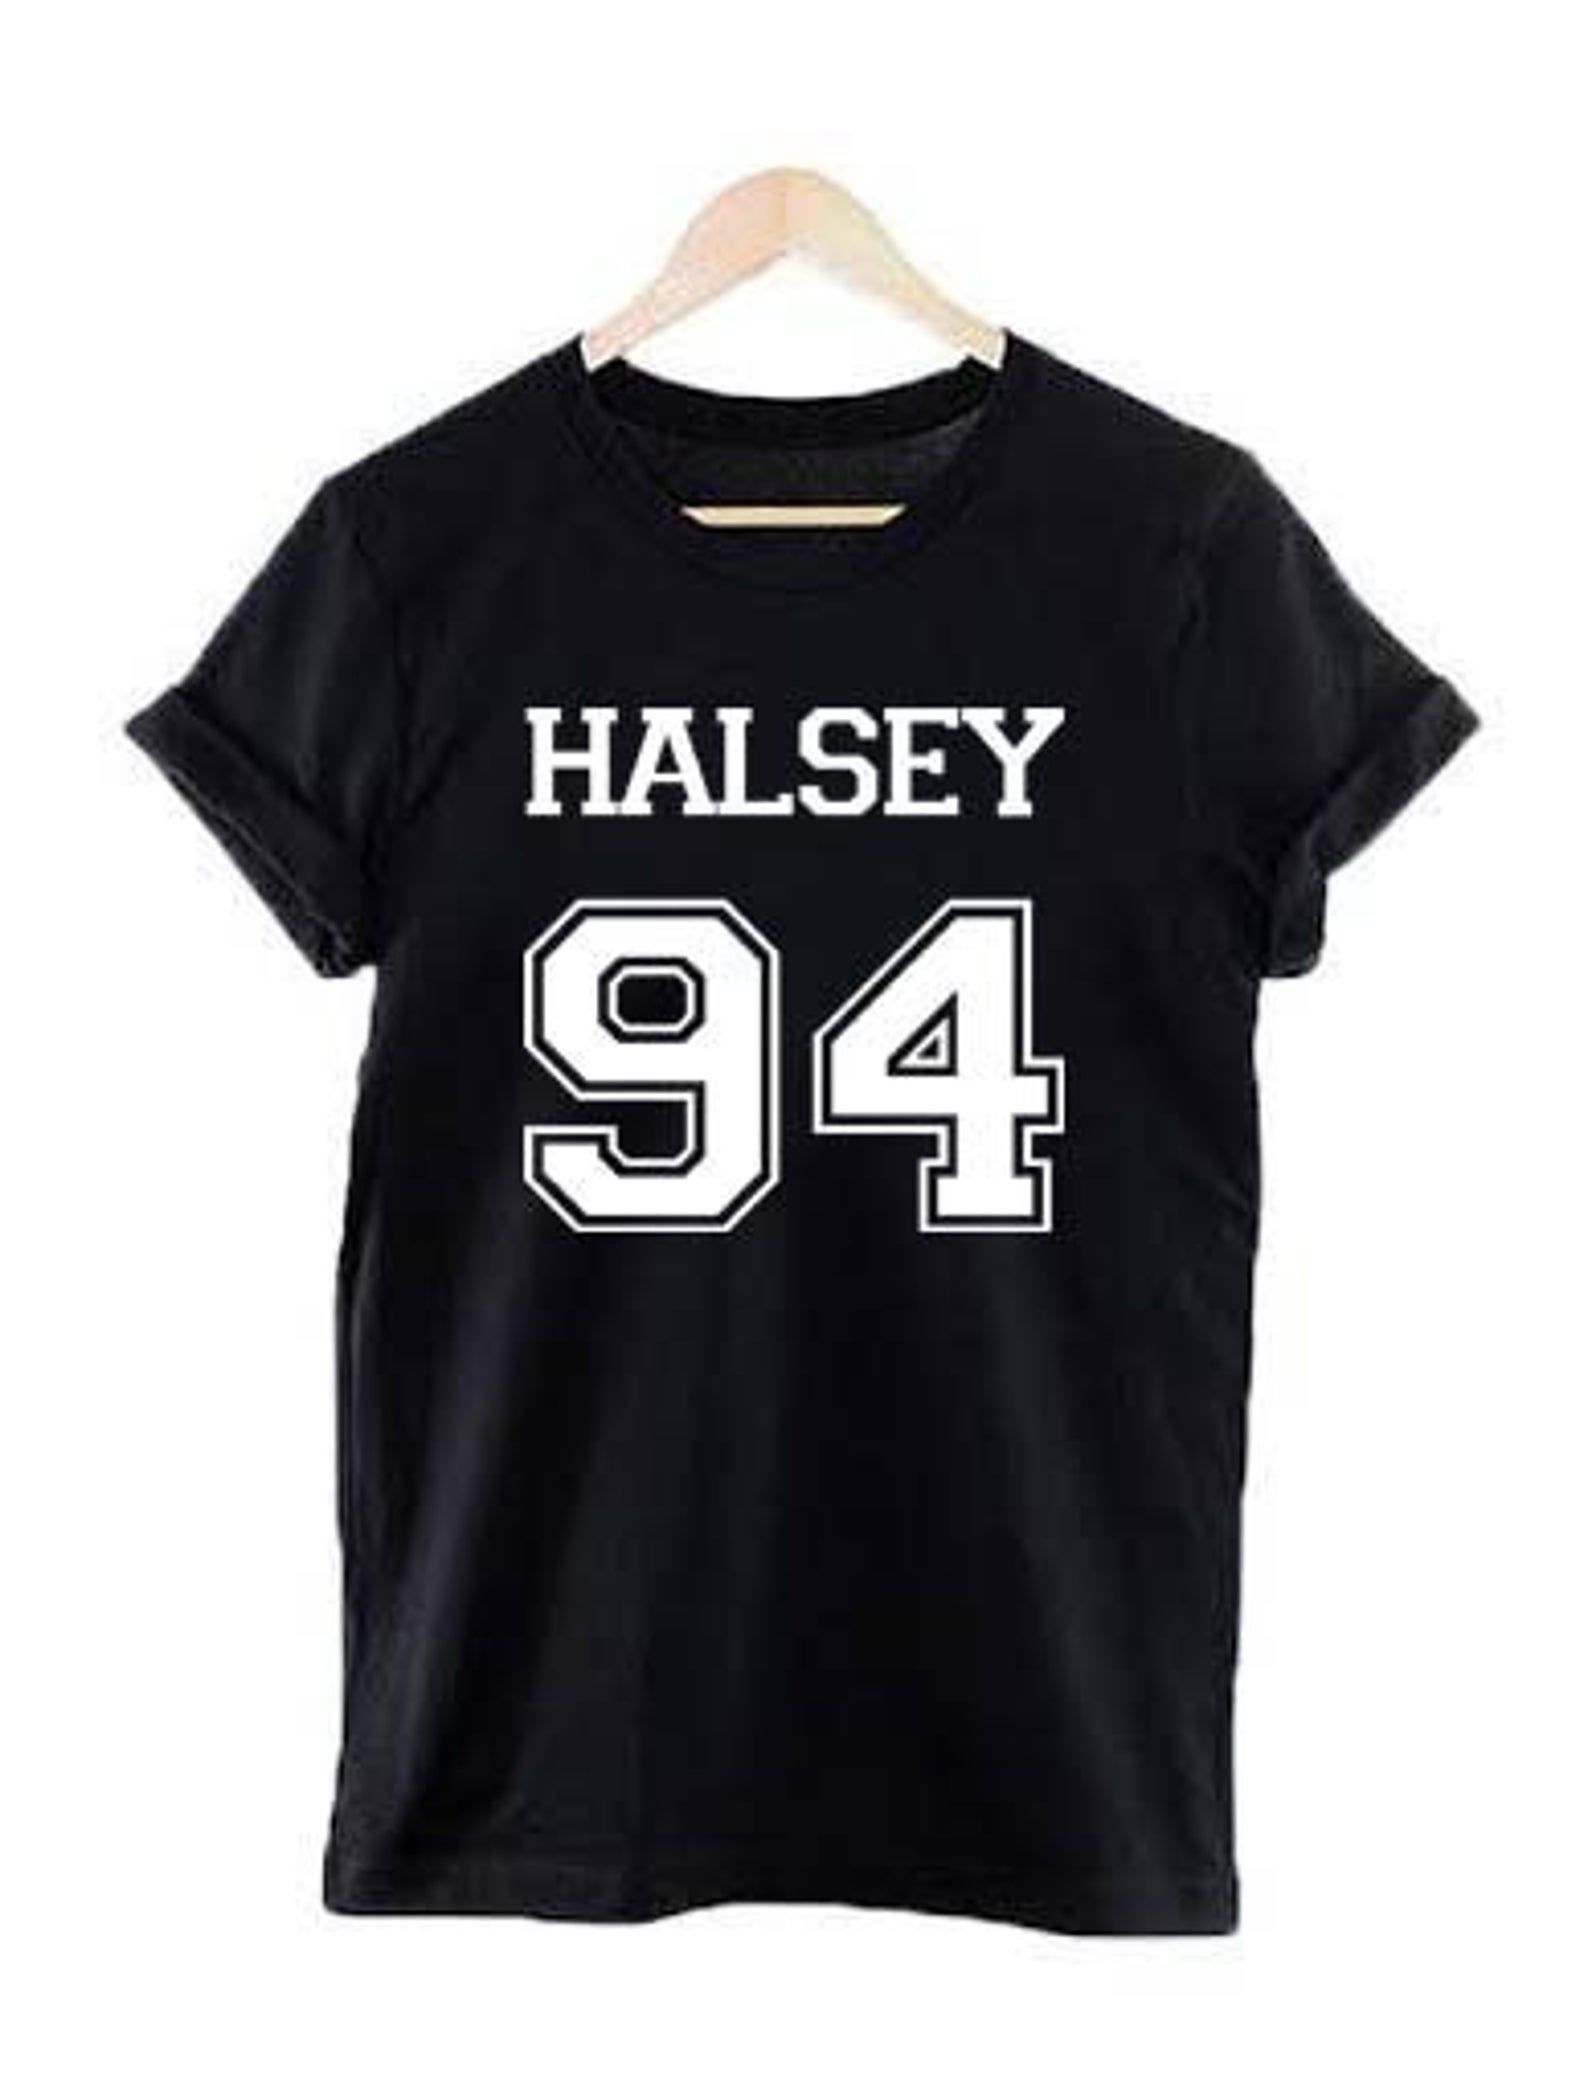 Halsey T-Shirt Year Birth 94